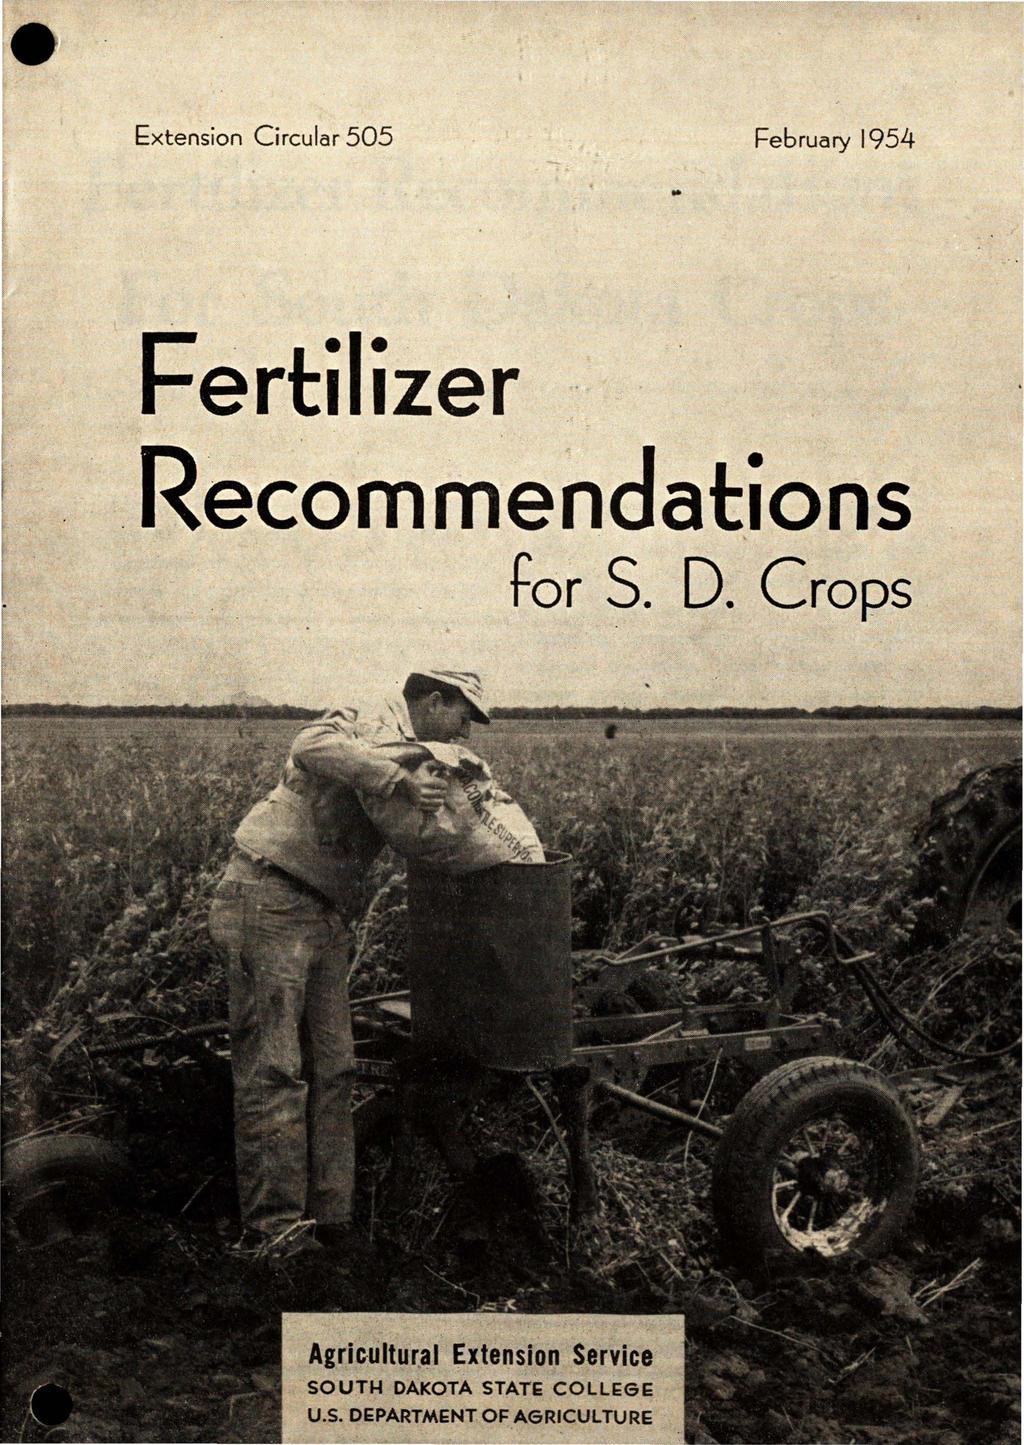 Extension Circular 505 February 1954 Fertilizer.Recommerldations for S. D. Crops.